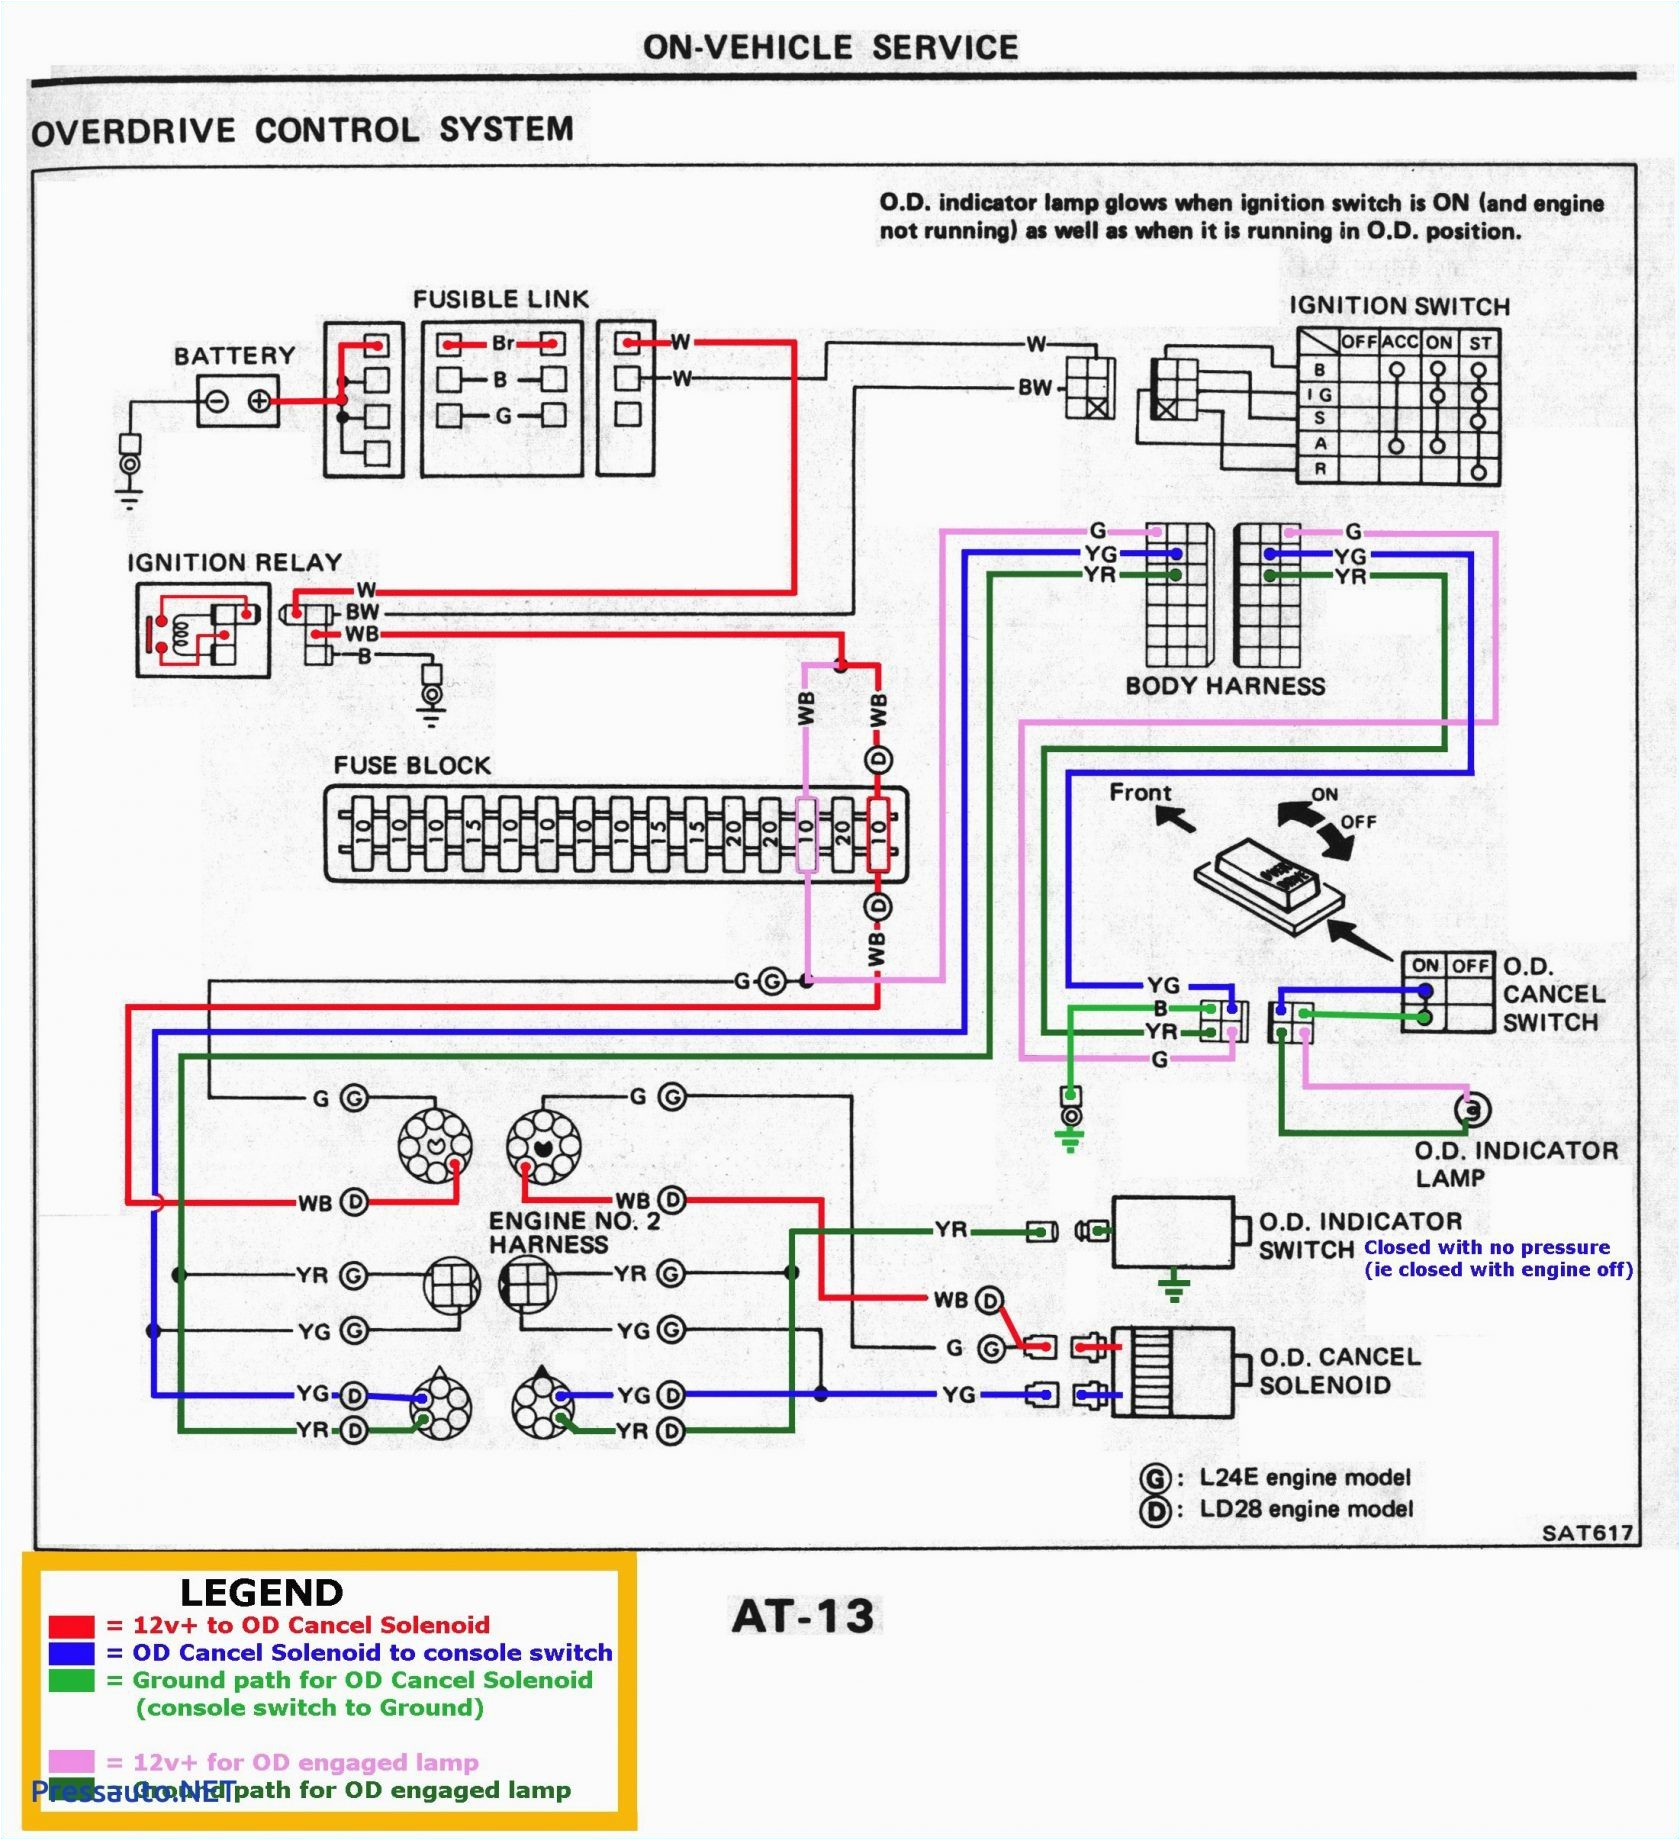 index 18 led and light circuit circuit diagram seekiccom wiring index 18 led and light circuit circuit diagram seekiccom